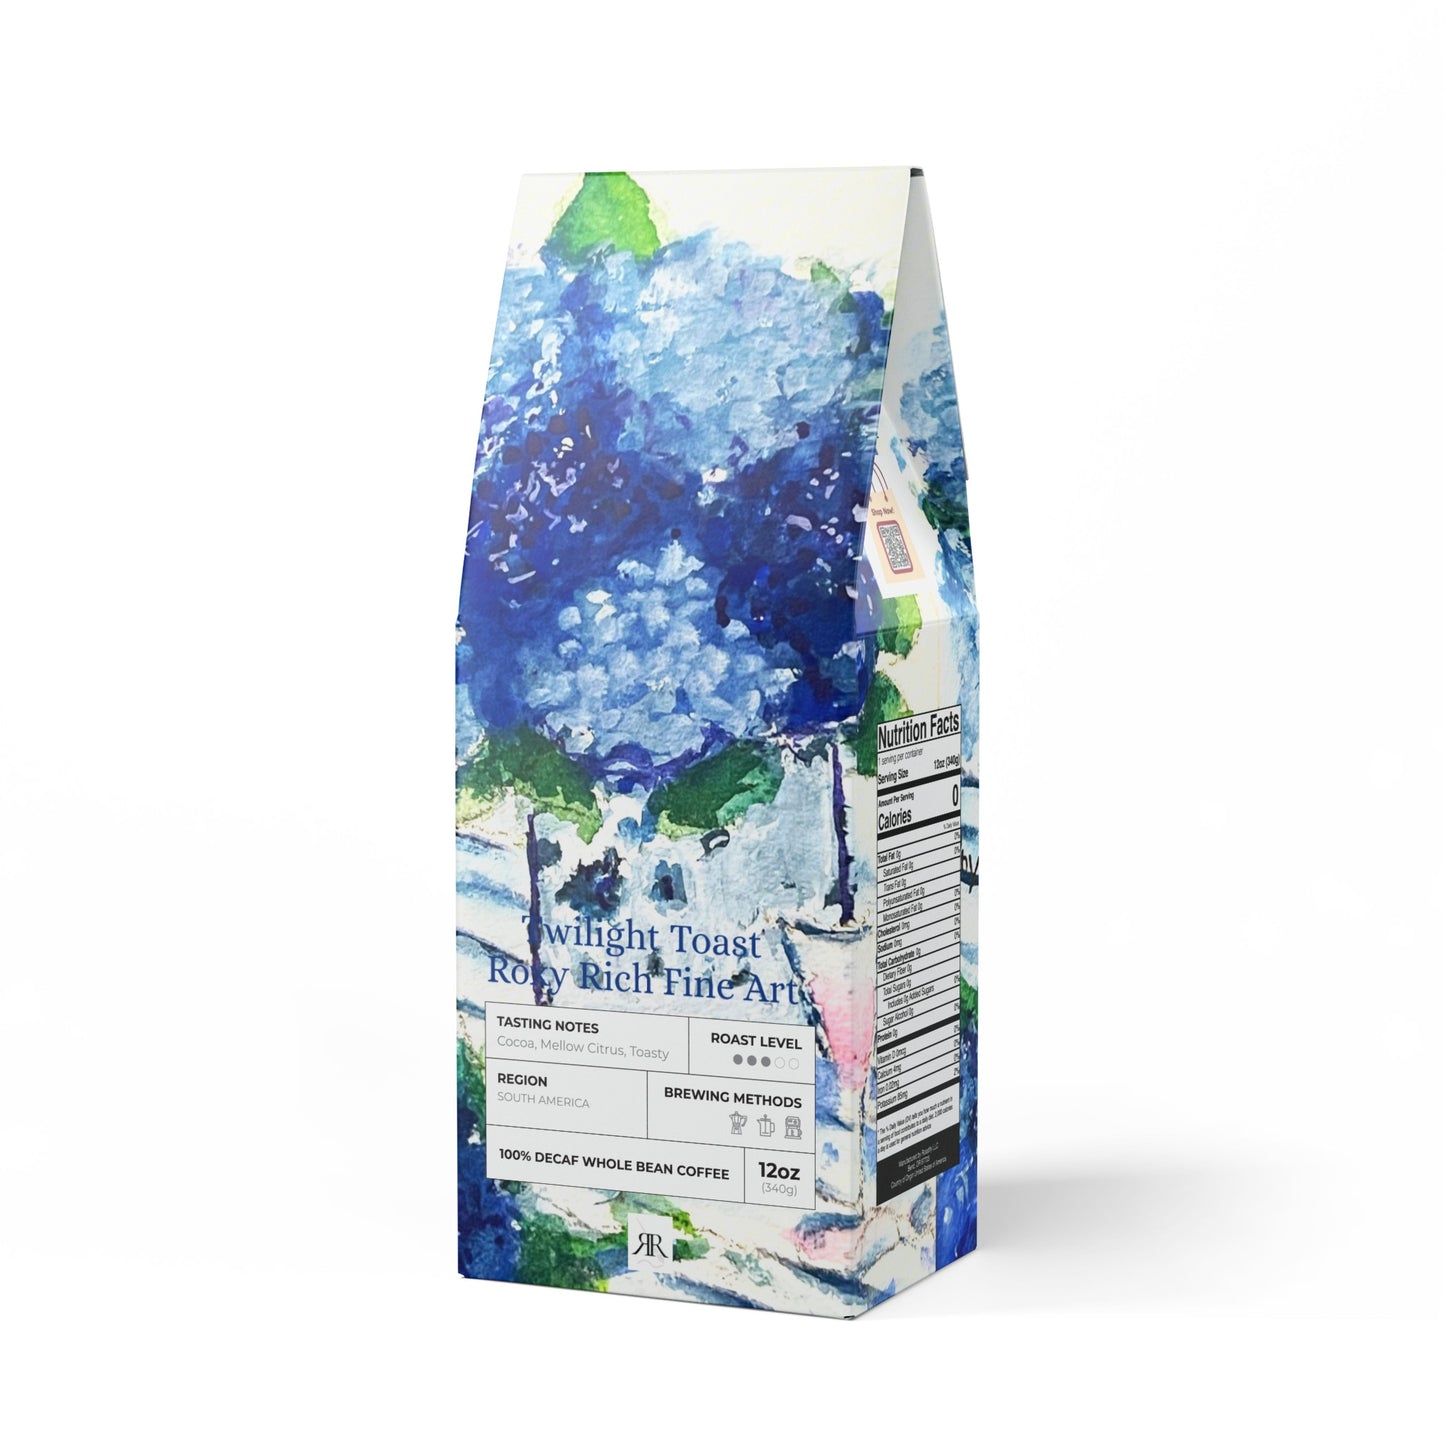 Hortensias azules, tostadas crepusculares, mezcla de café descafeinado